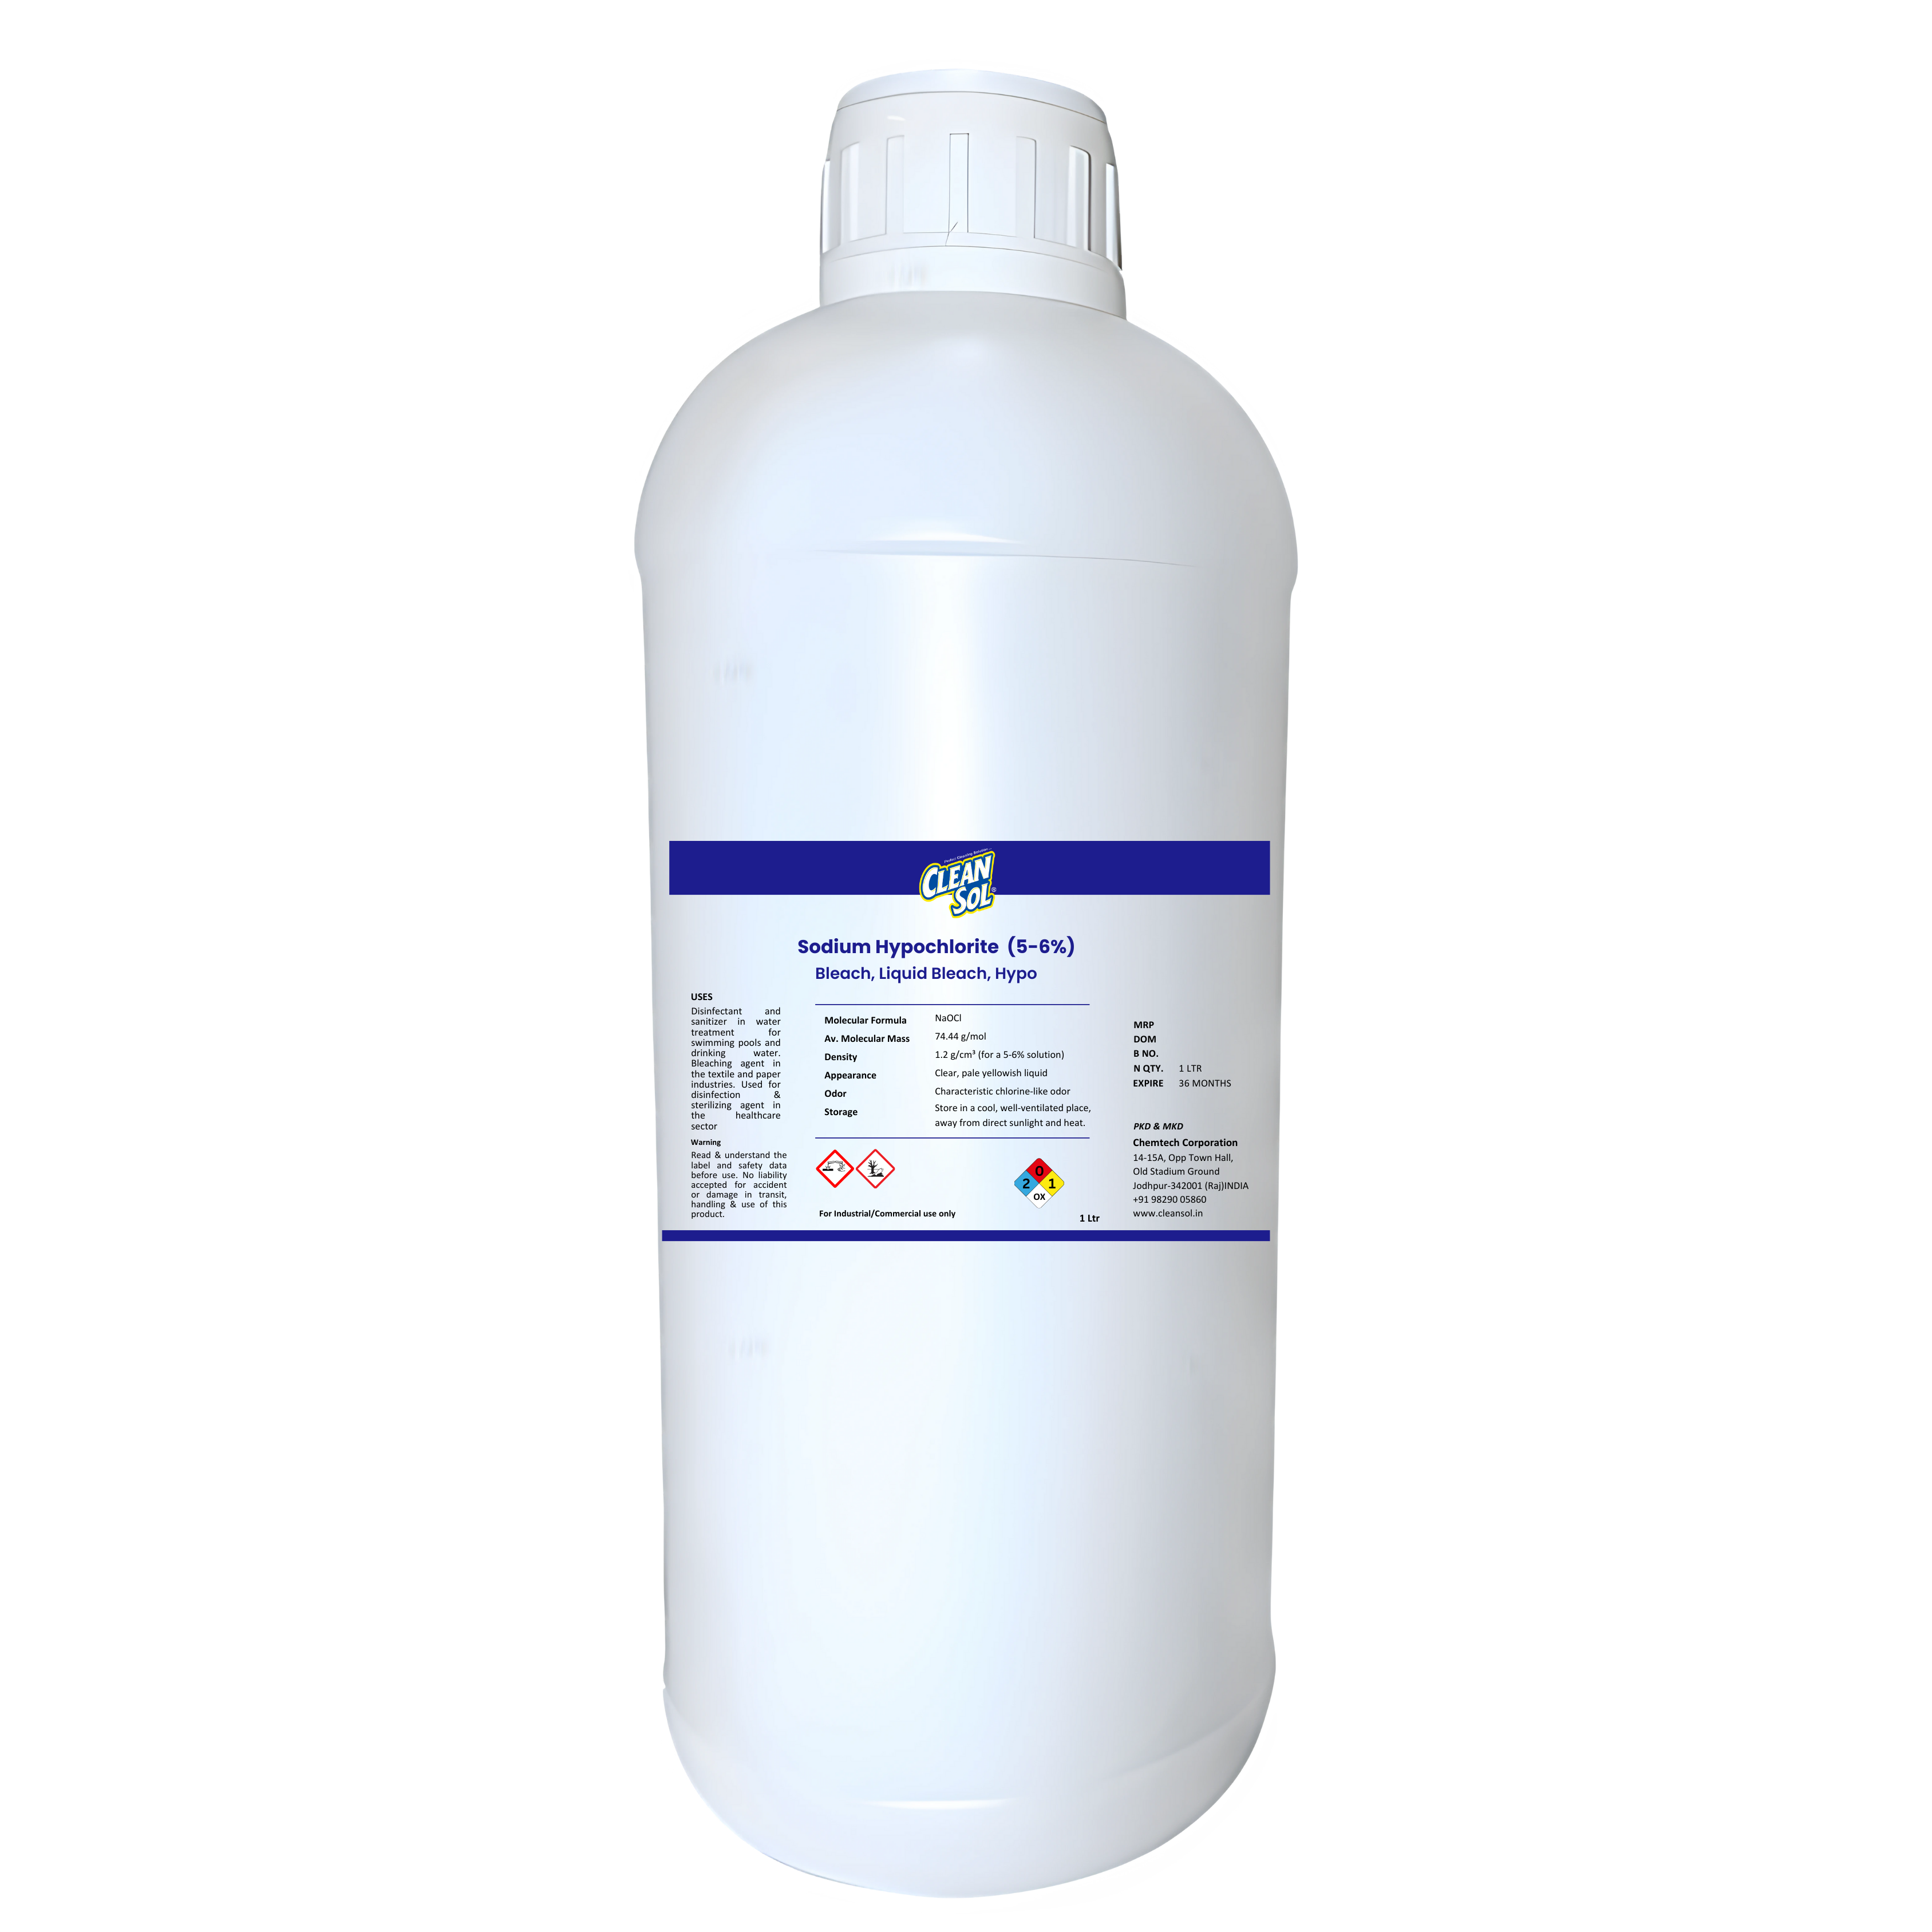 Sodium Hypochlorite  (5-6%), Bleach, Liquid Bleach, Hypo